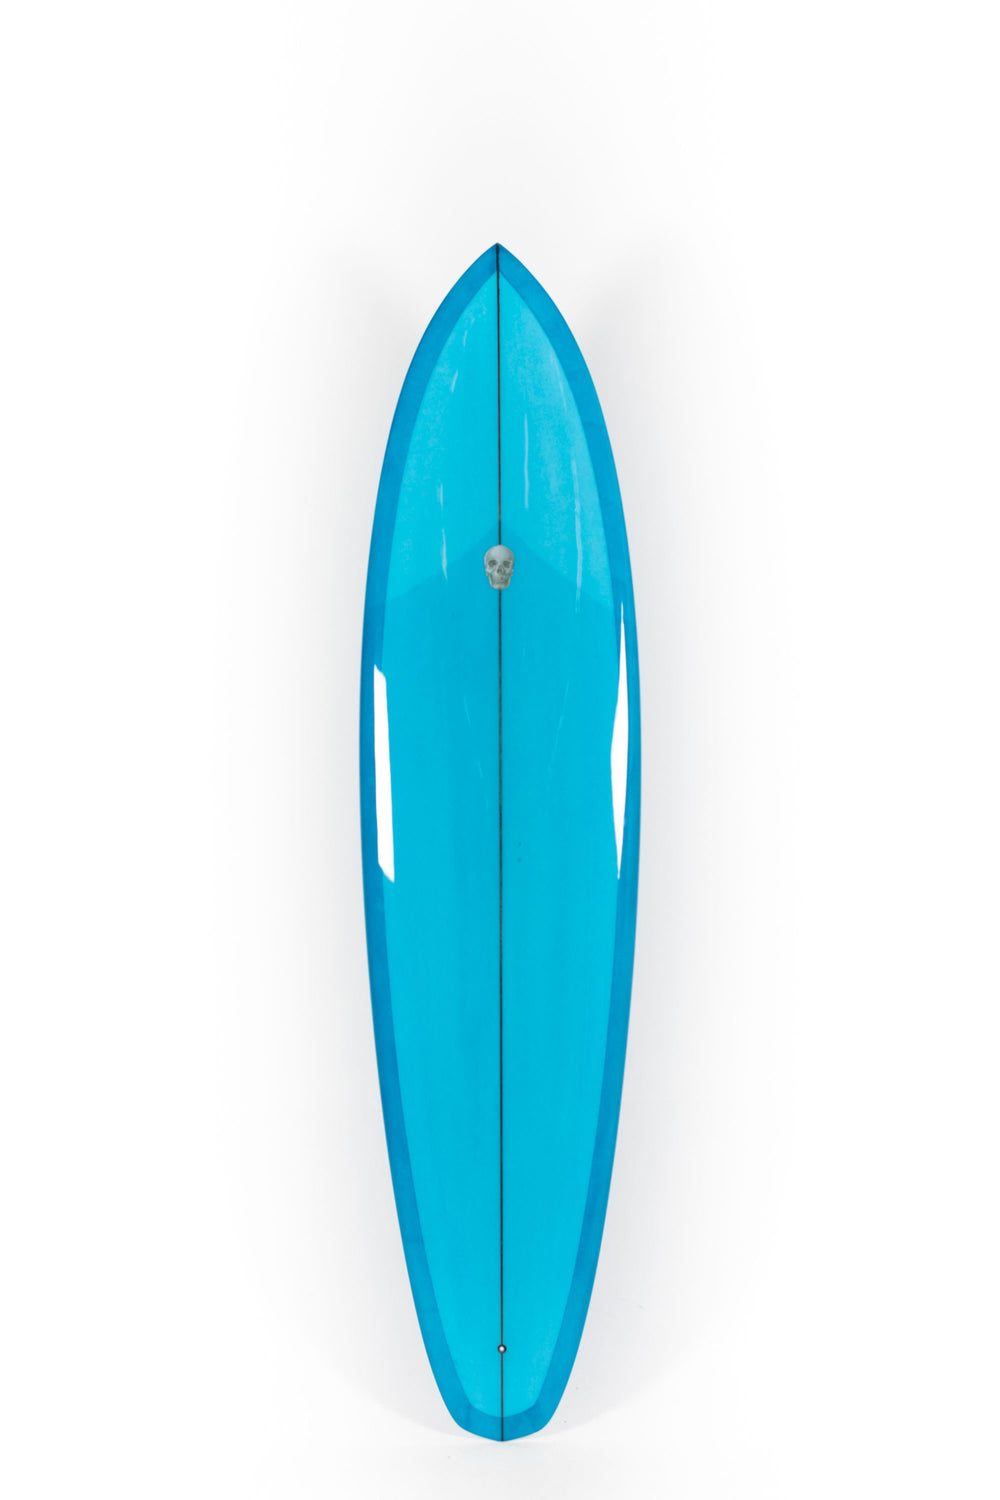 Pukas Surf Shop - Christenson Surfboards - ULTRA TRACKER - 7'6